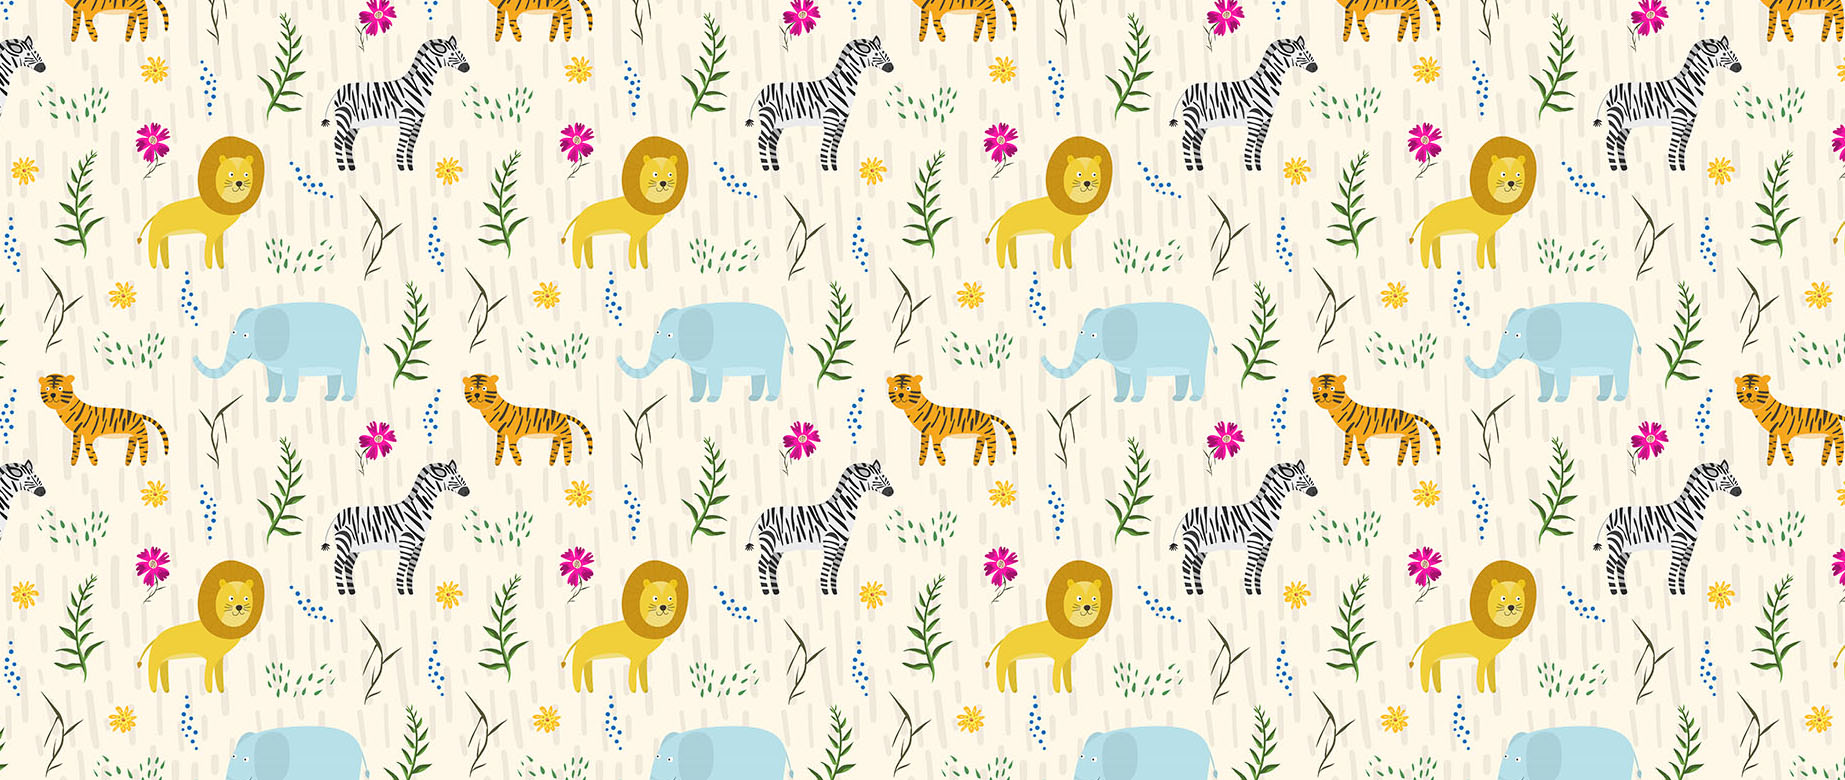 Cute-Lion-Tiger-Zebra-Elephant-wallpaper-seamless-repeat-view